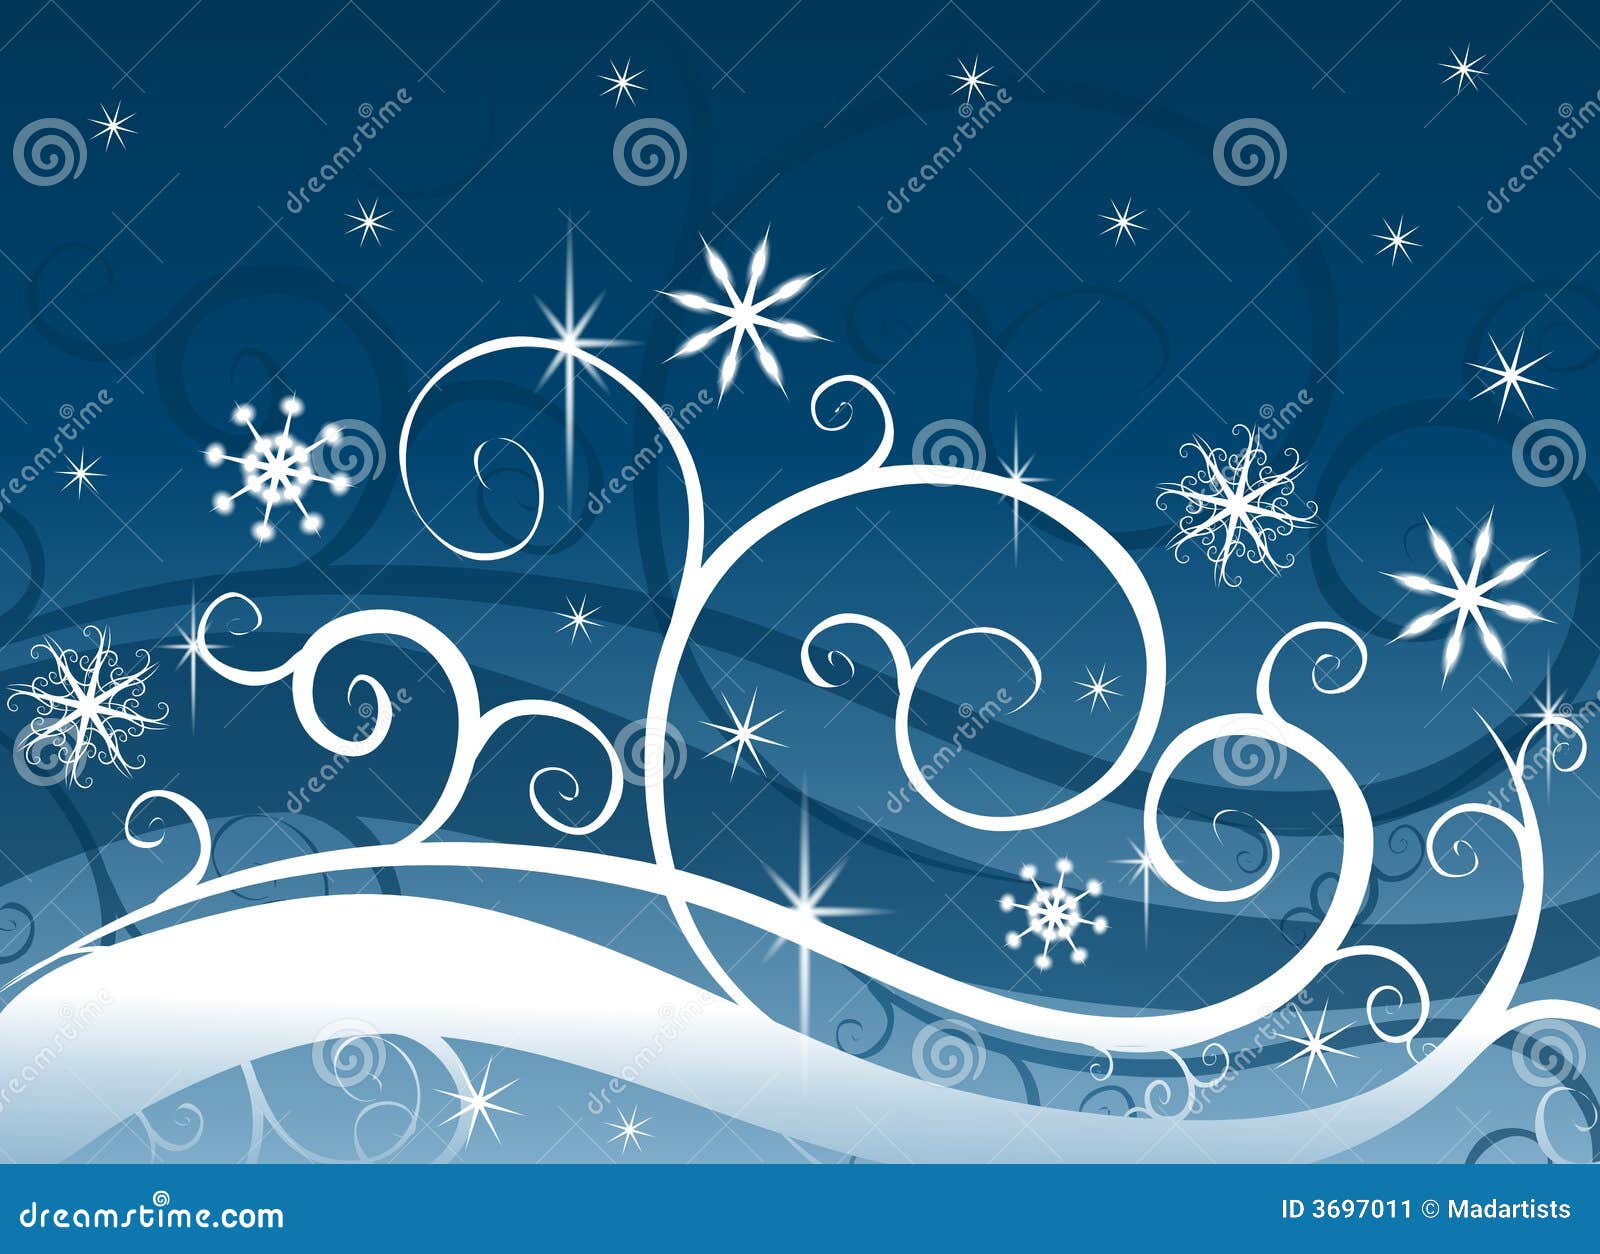 Blue Winter Wonderland Snowflakes Stock Image Image 3697011